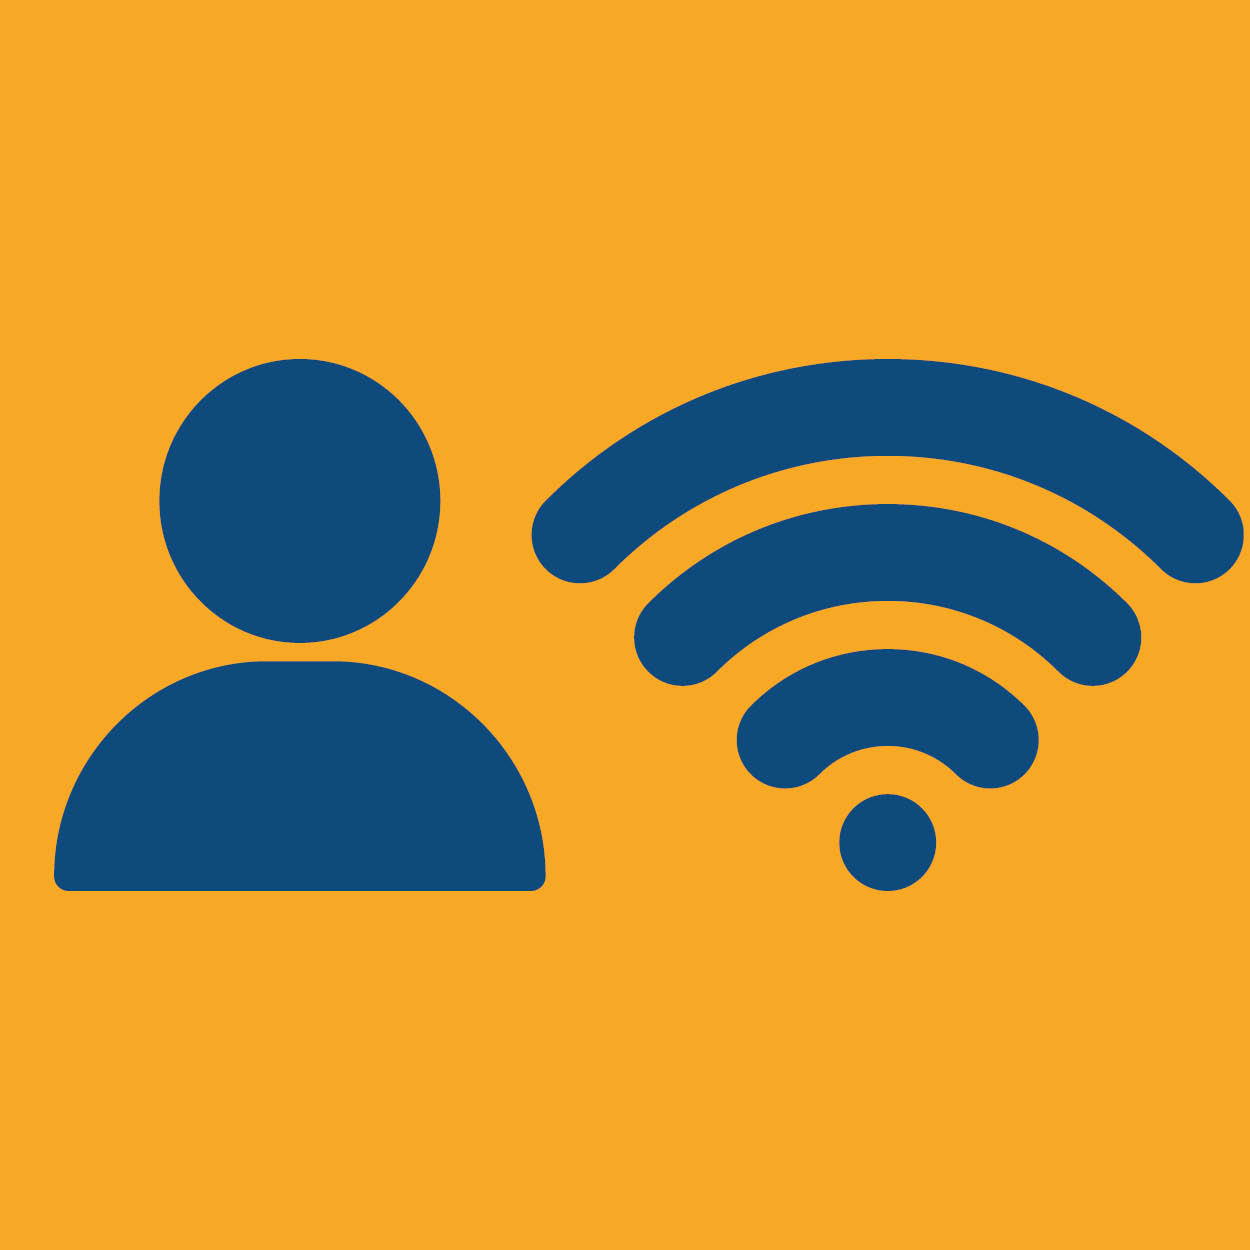 Profile and wifi signal icon